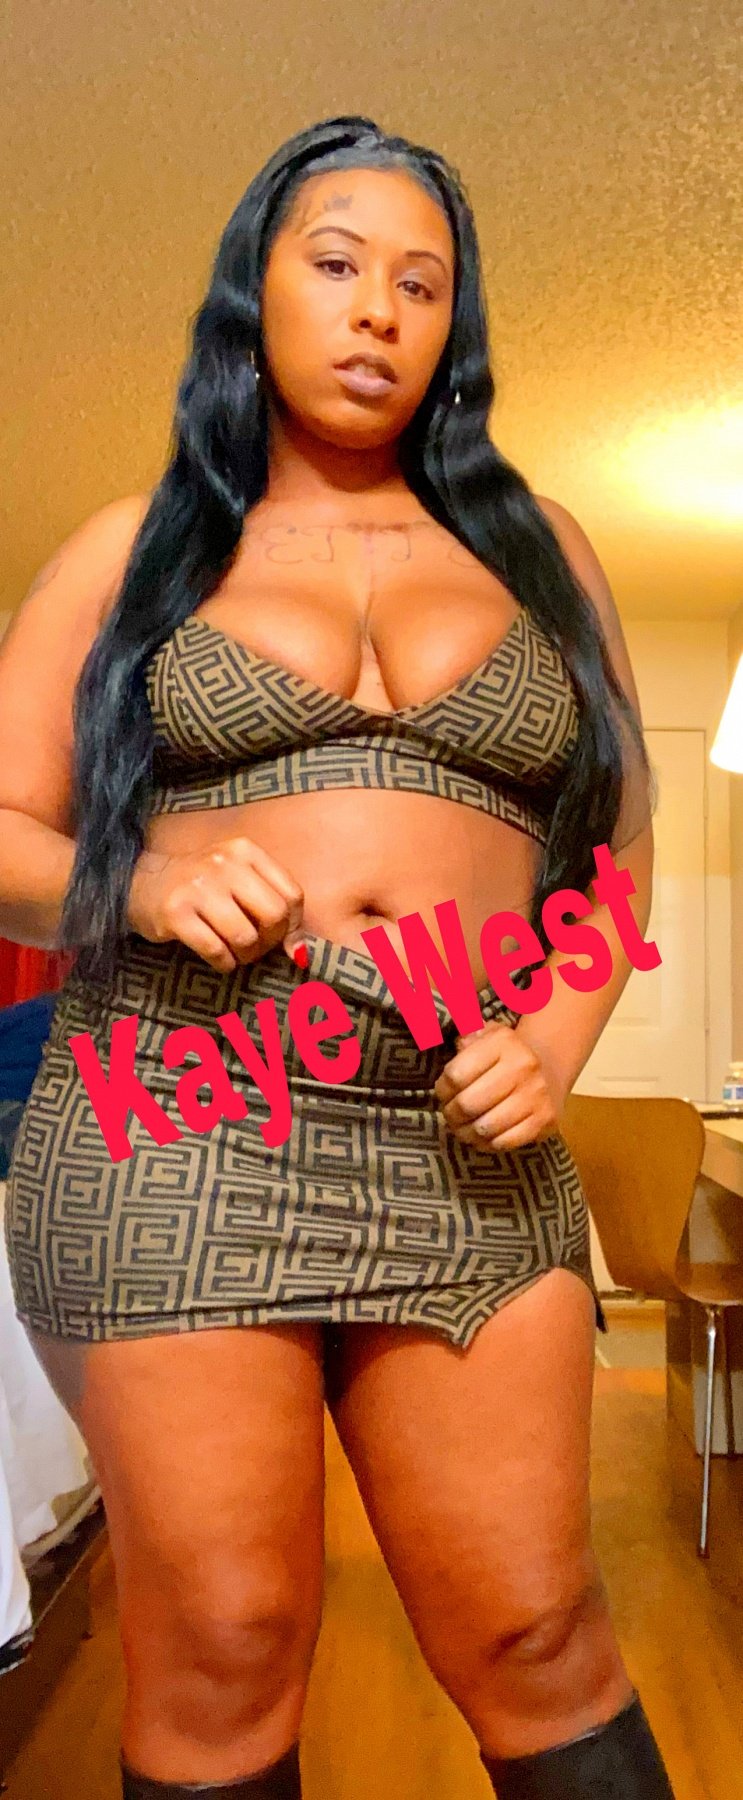 Kaye West